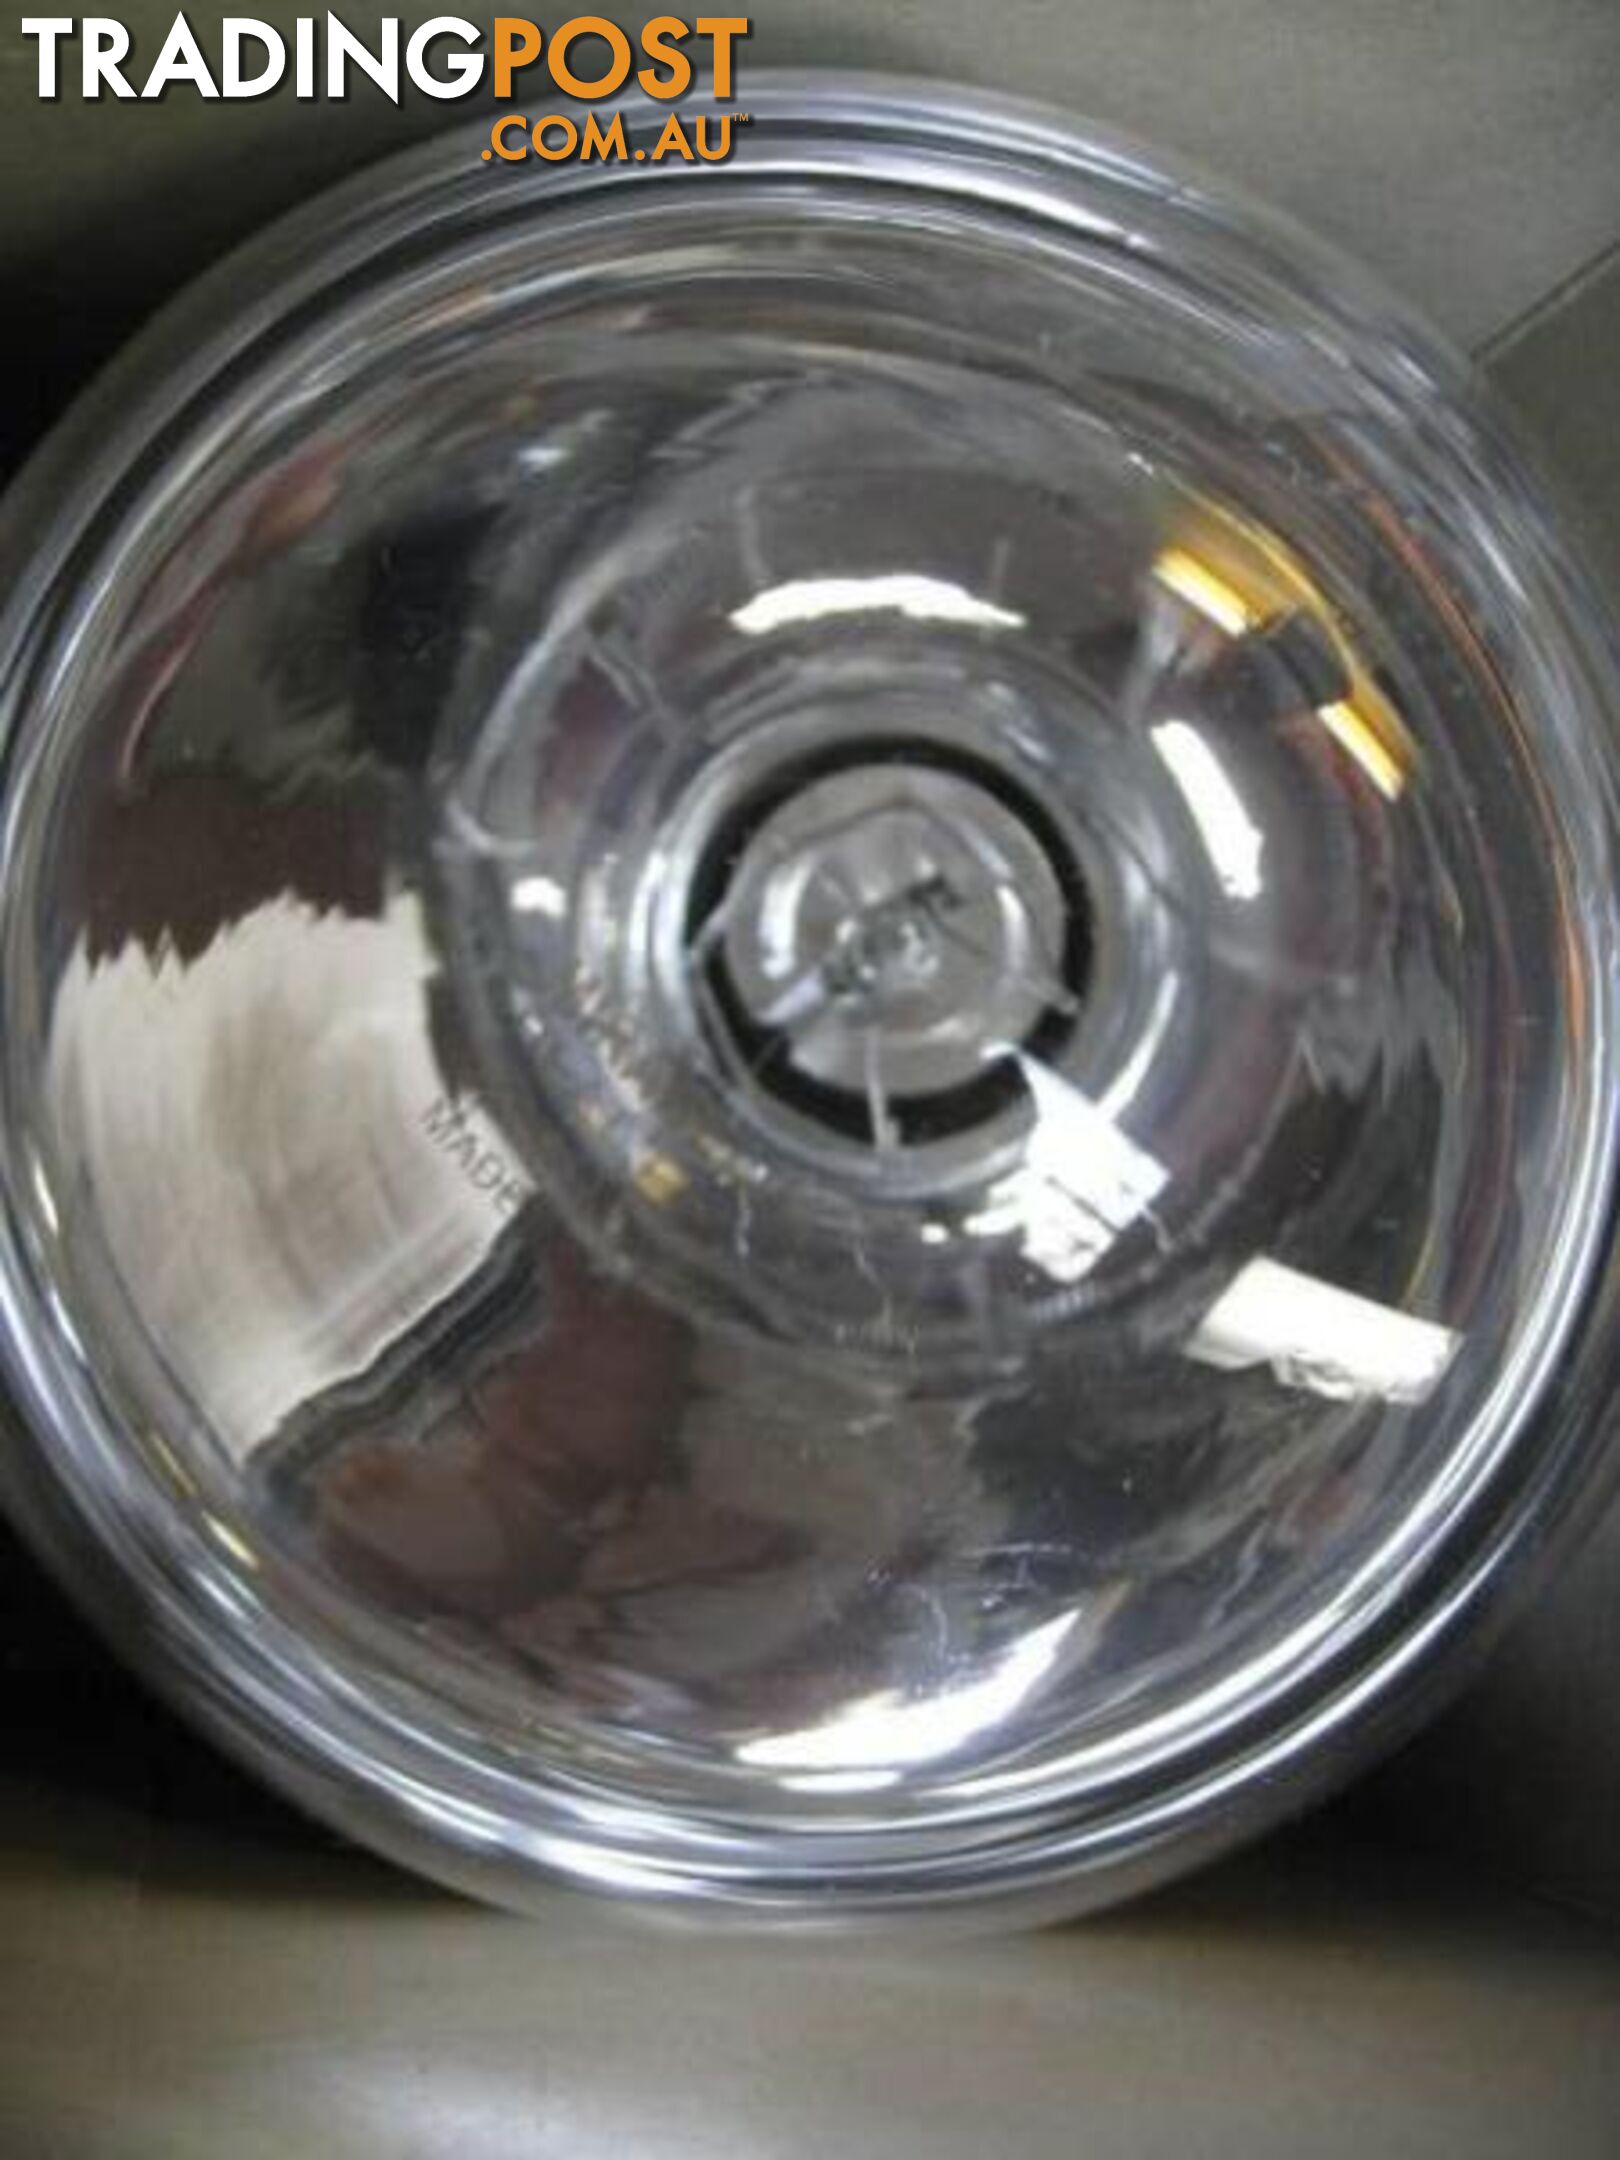 4x MIRABELLA 275W EDISON SCREW CAP INFRARED BATHROOM HEATING LAMP